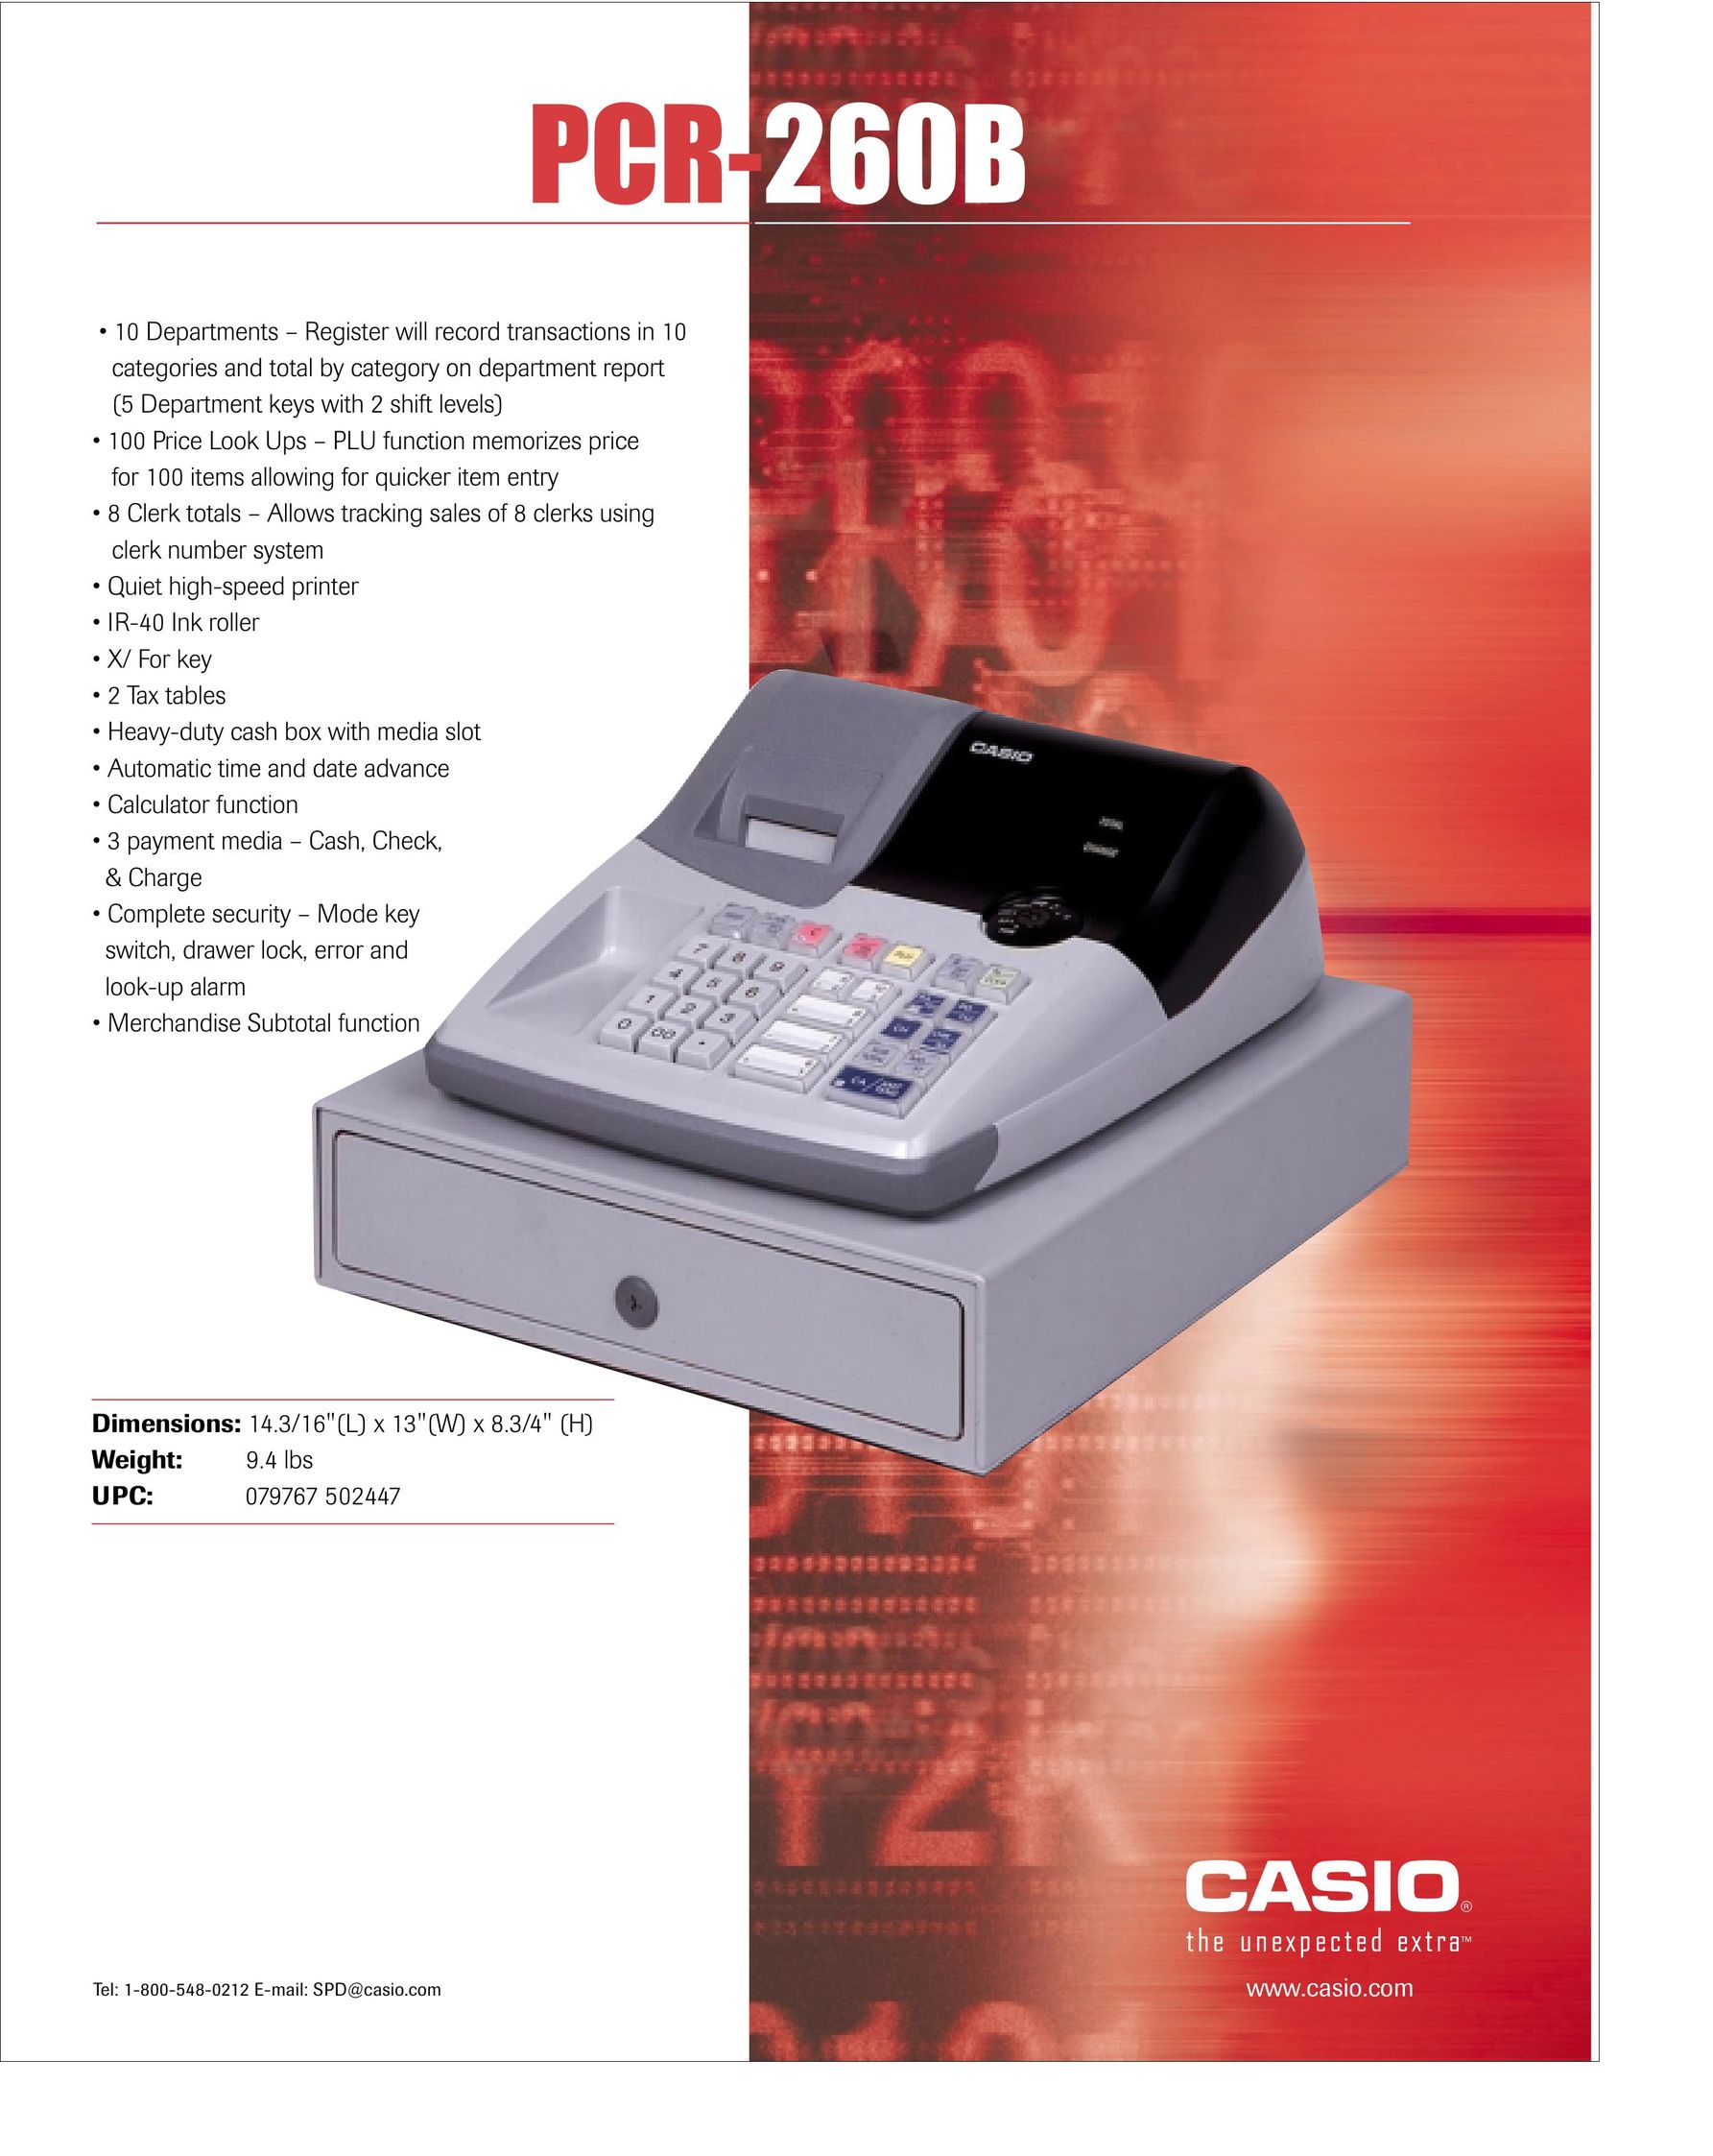 Casio PCR-260B Cash Register User Manual